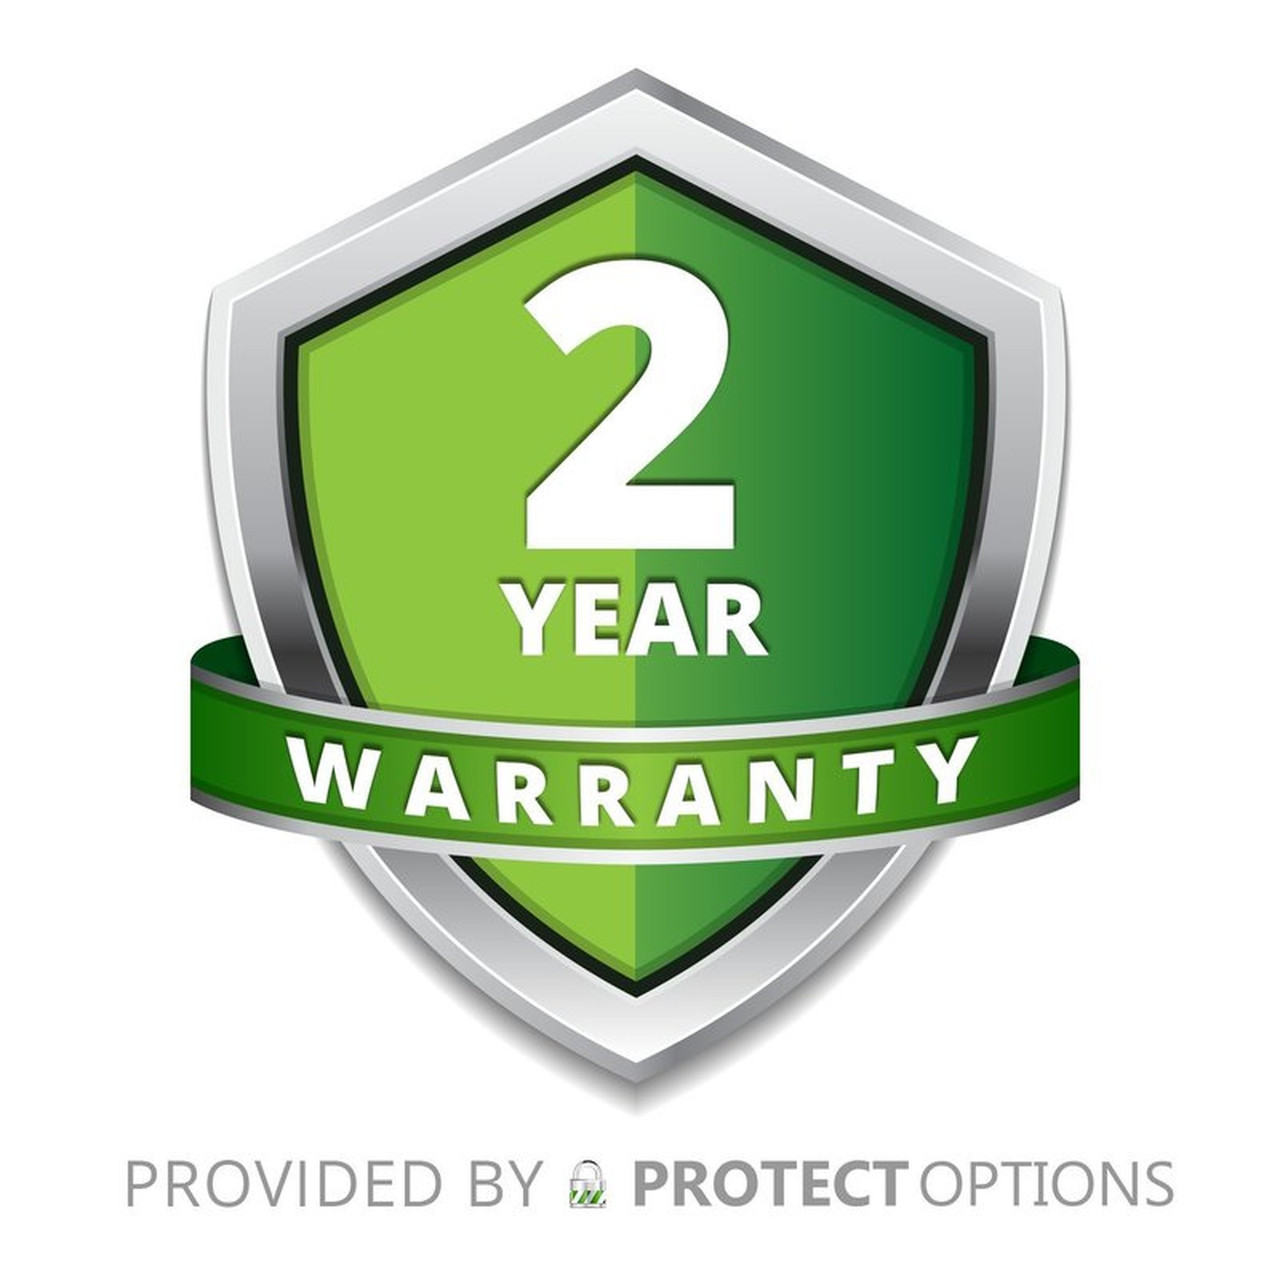 2 Year Warranty No Deductible - Monitors sale price of $1500-$1999.99